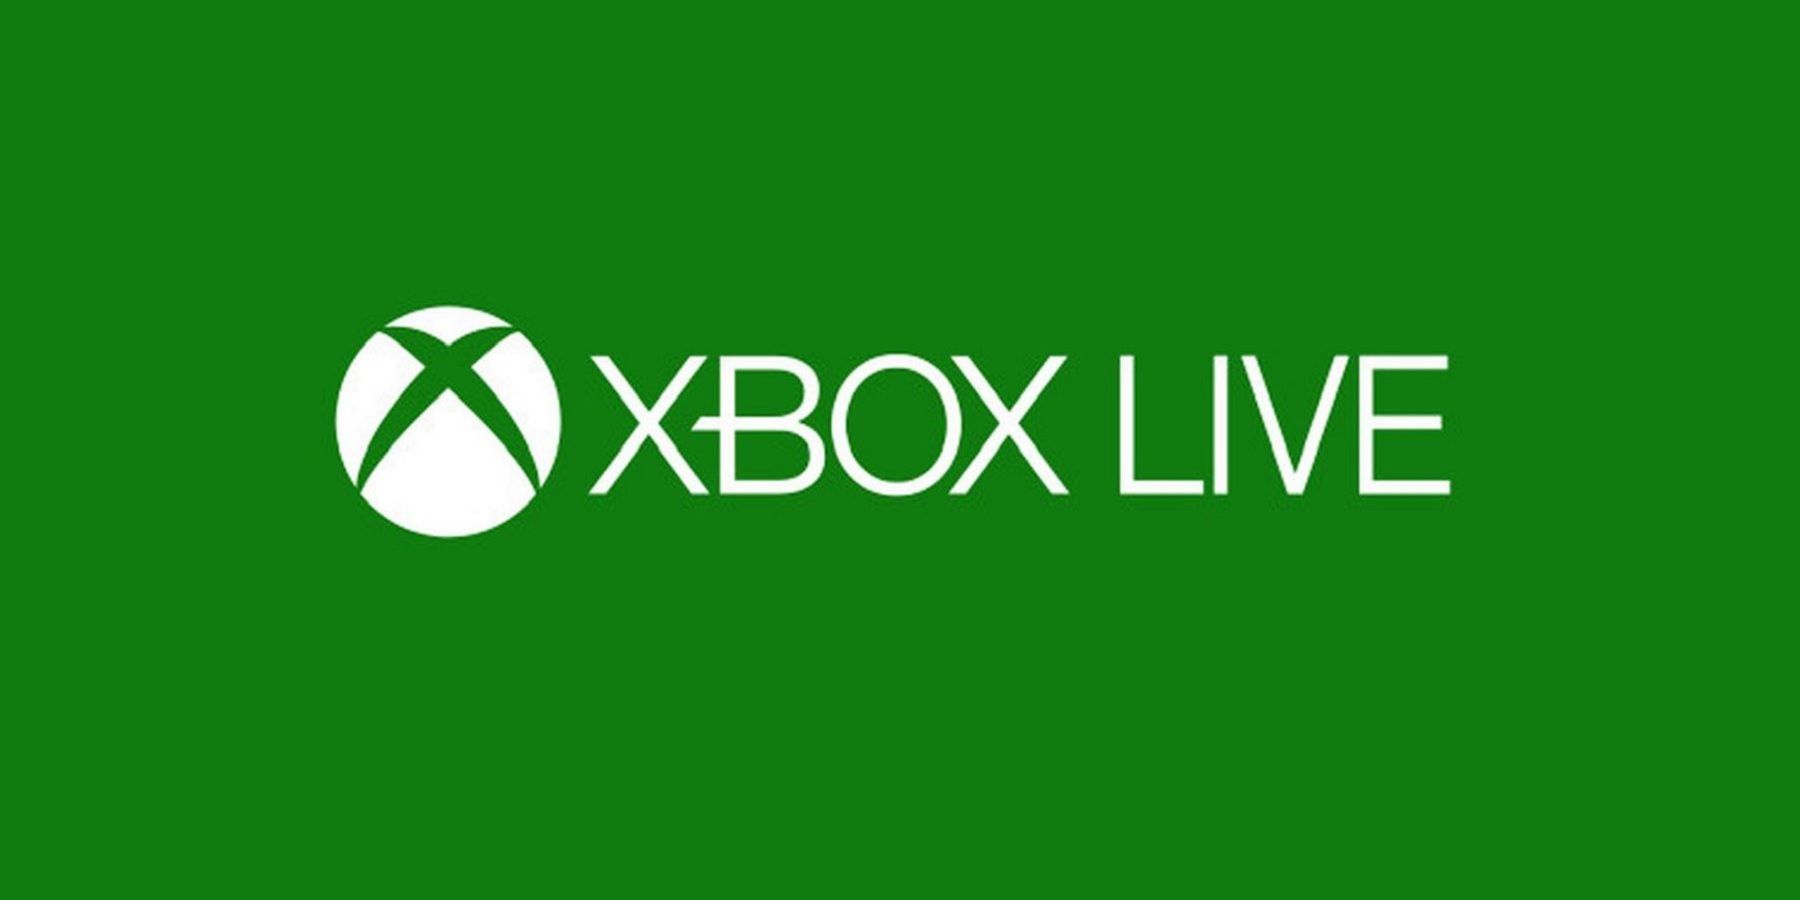 Xbox Live turun lagi